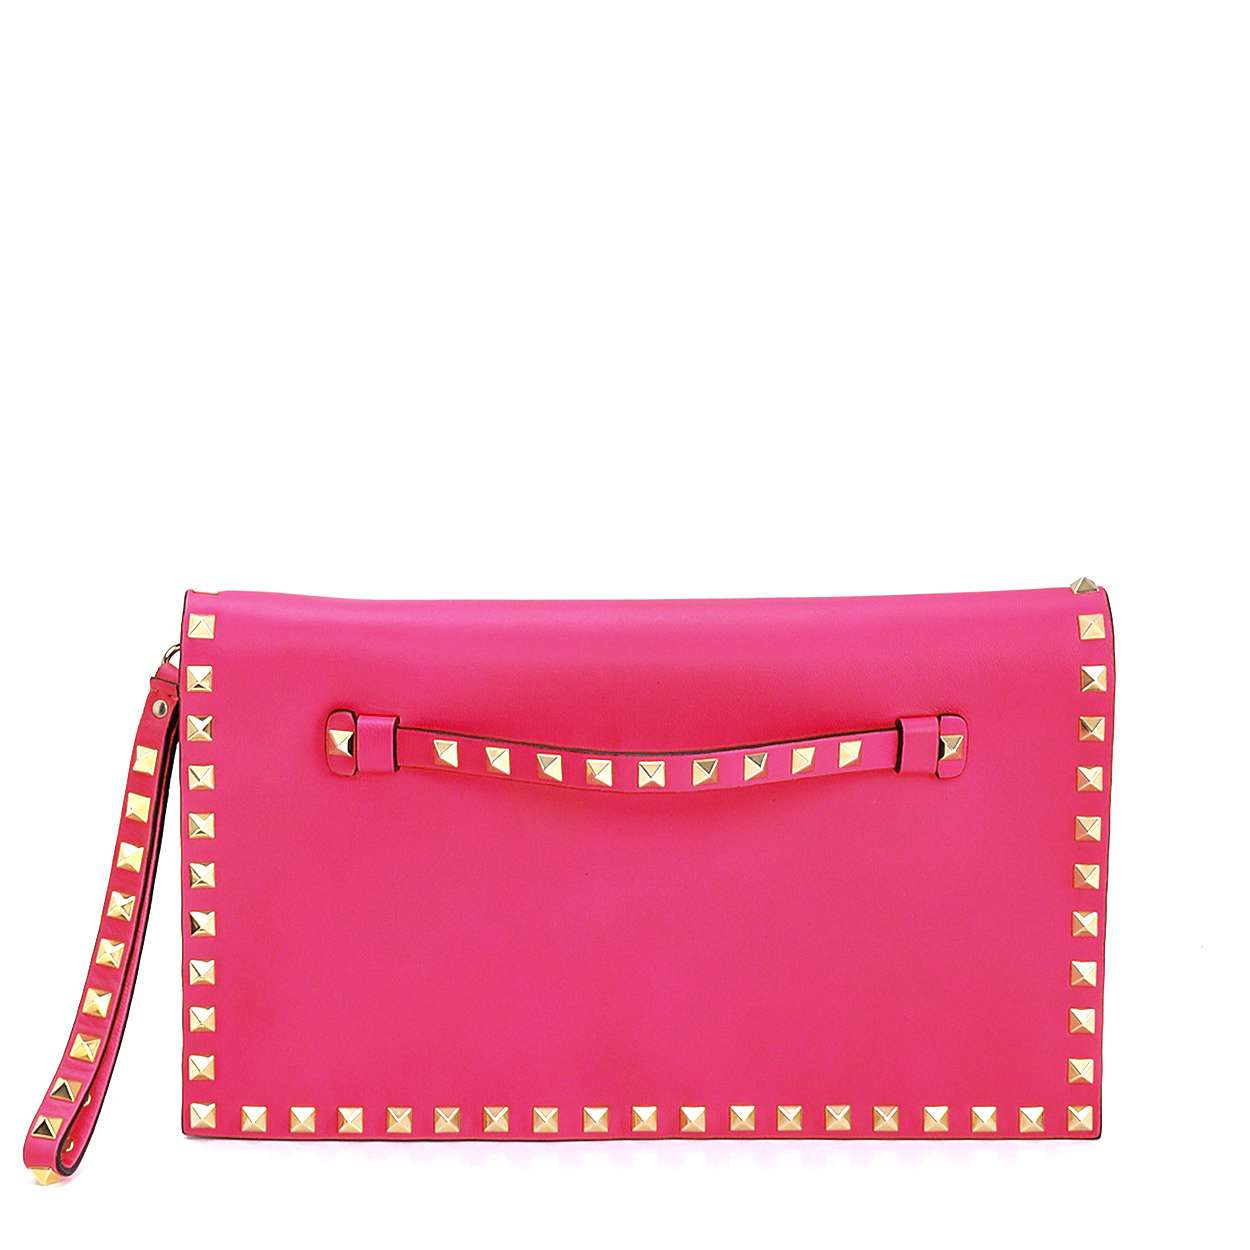 Valentino - Pink Leather Rockstud Wristlet Clutch